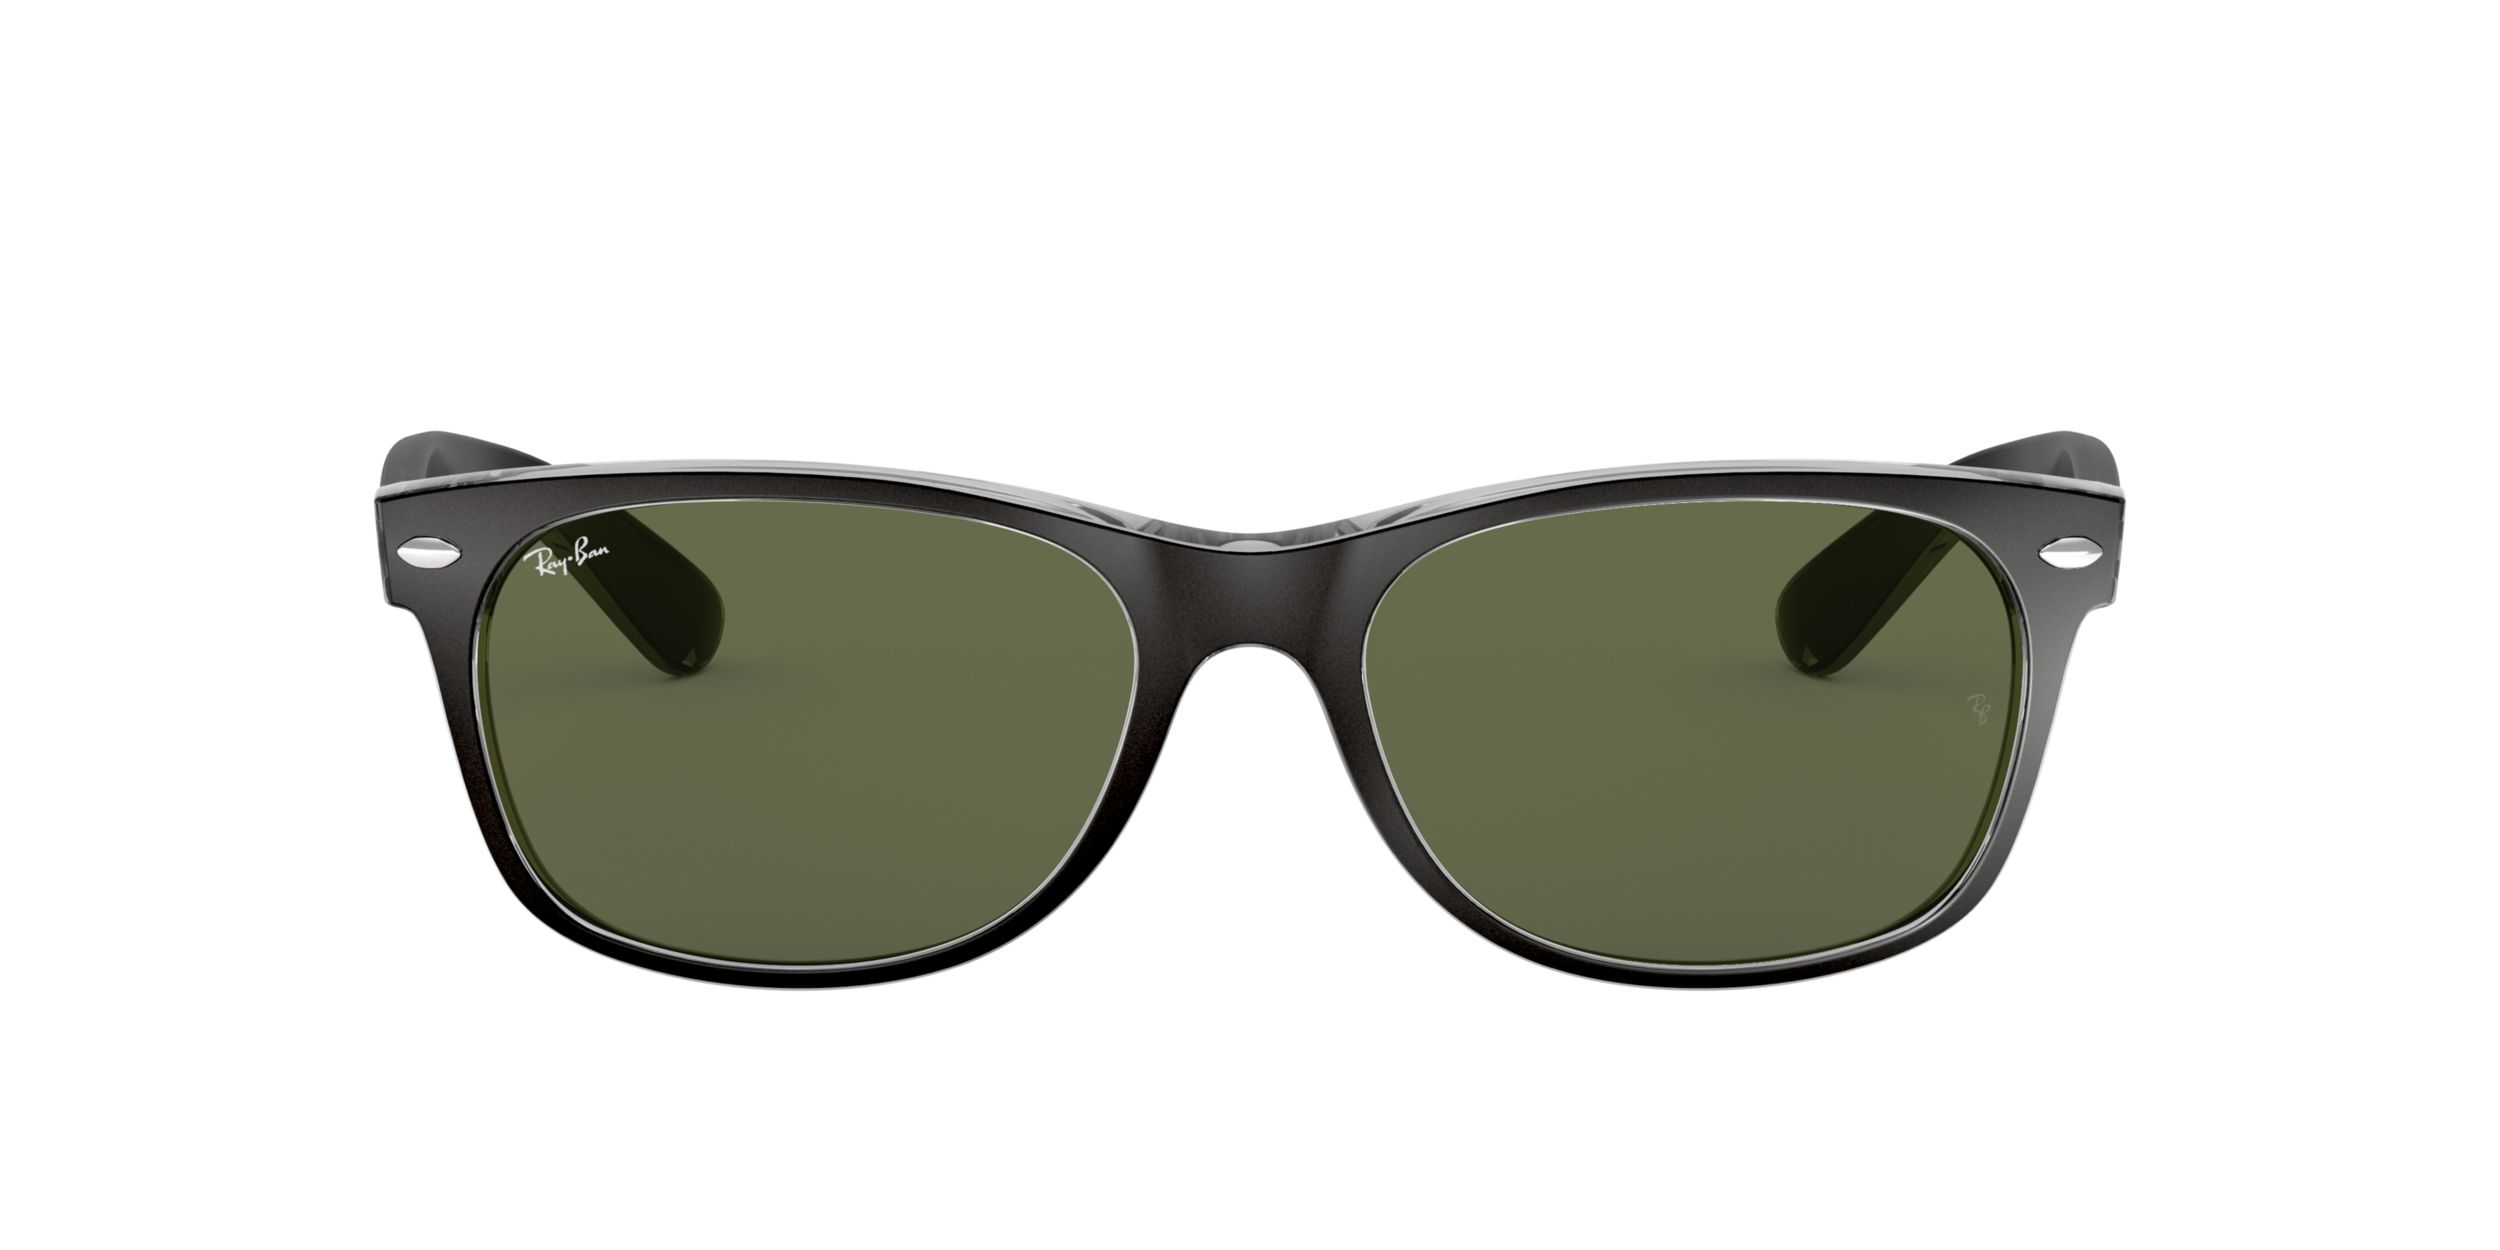 Image of Ray Ban Men's/Women's New Wayfarer Sunglasses